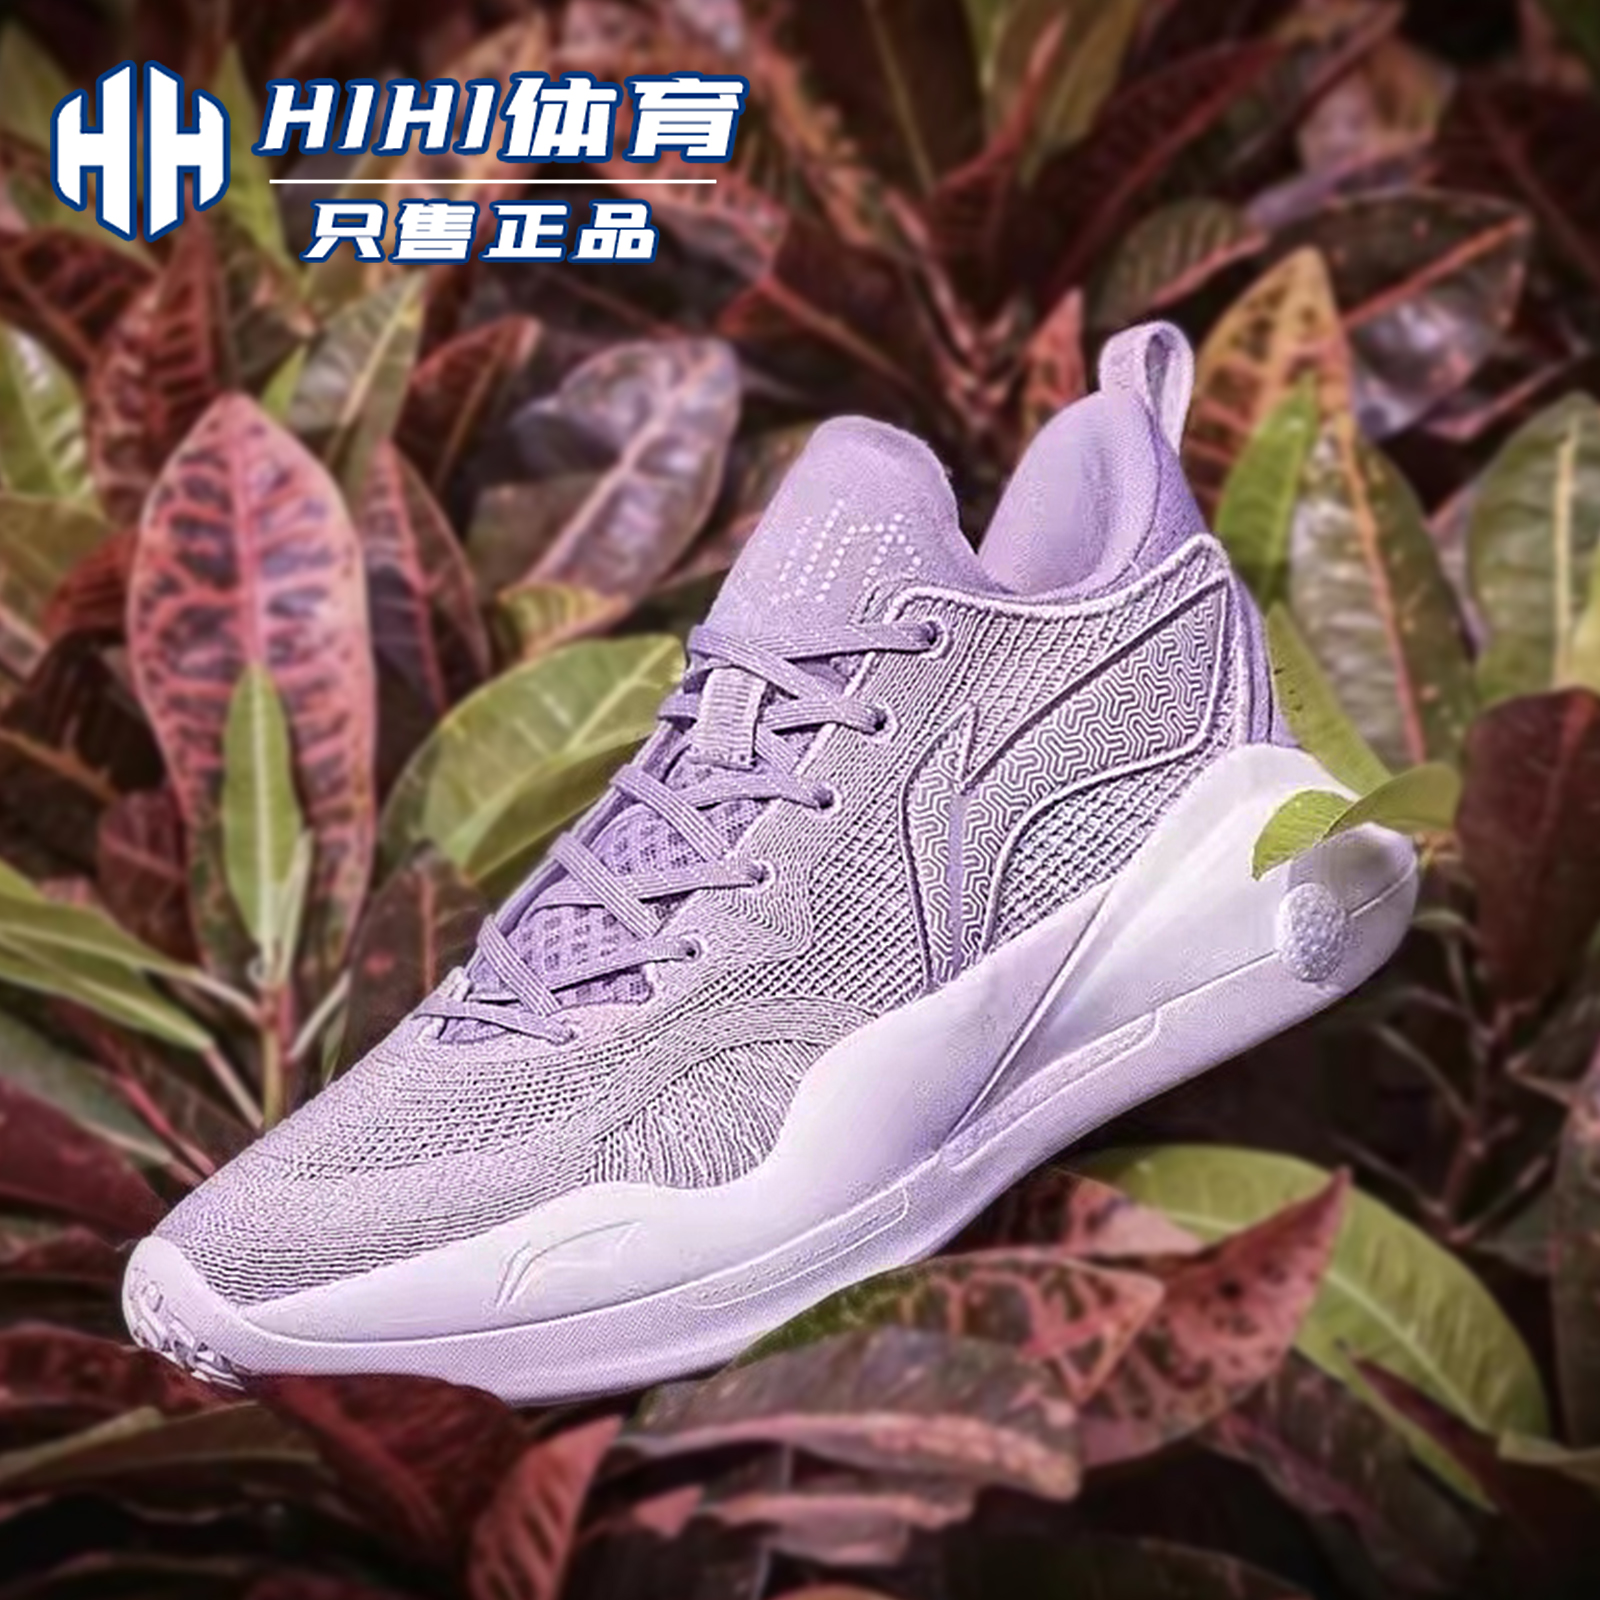 Hihi Sports Lining/Li Ning Shuai 15v2 Wear-Resistant Low Ankle Actual ...